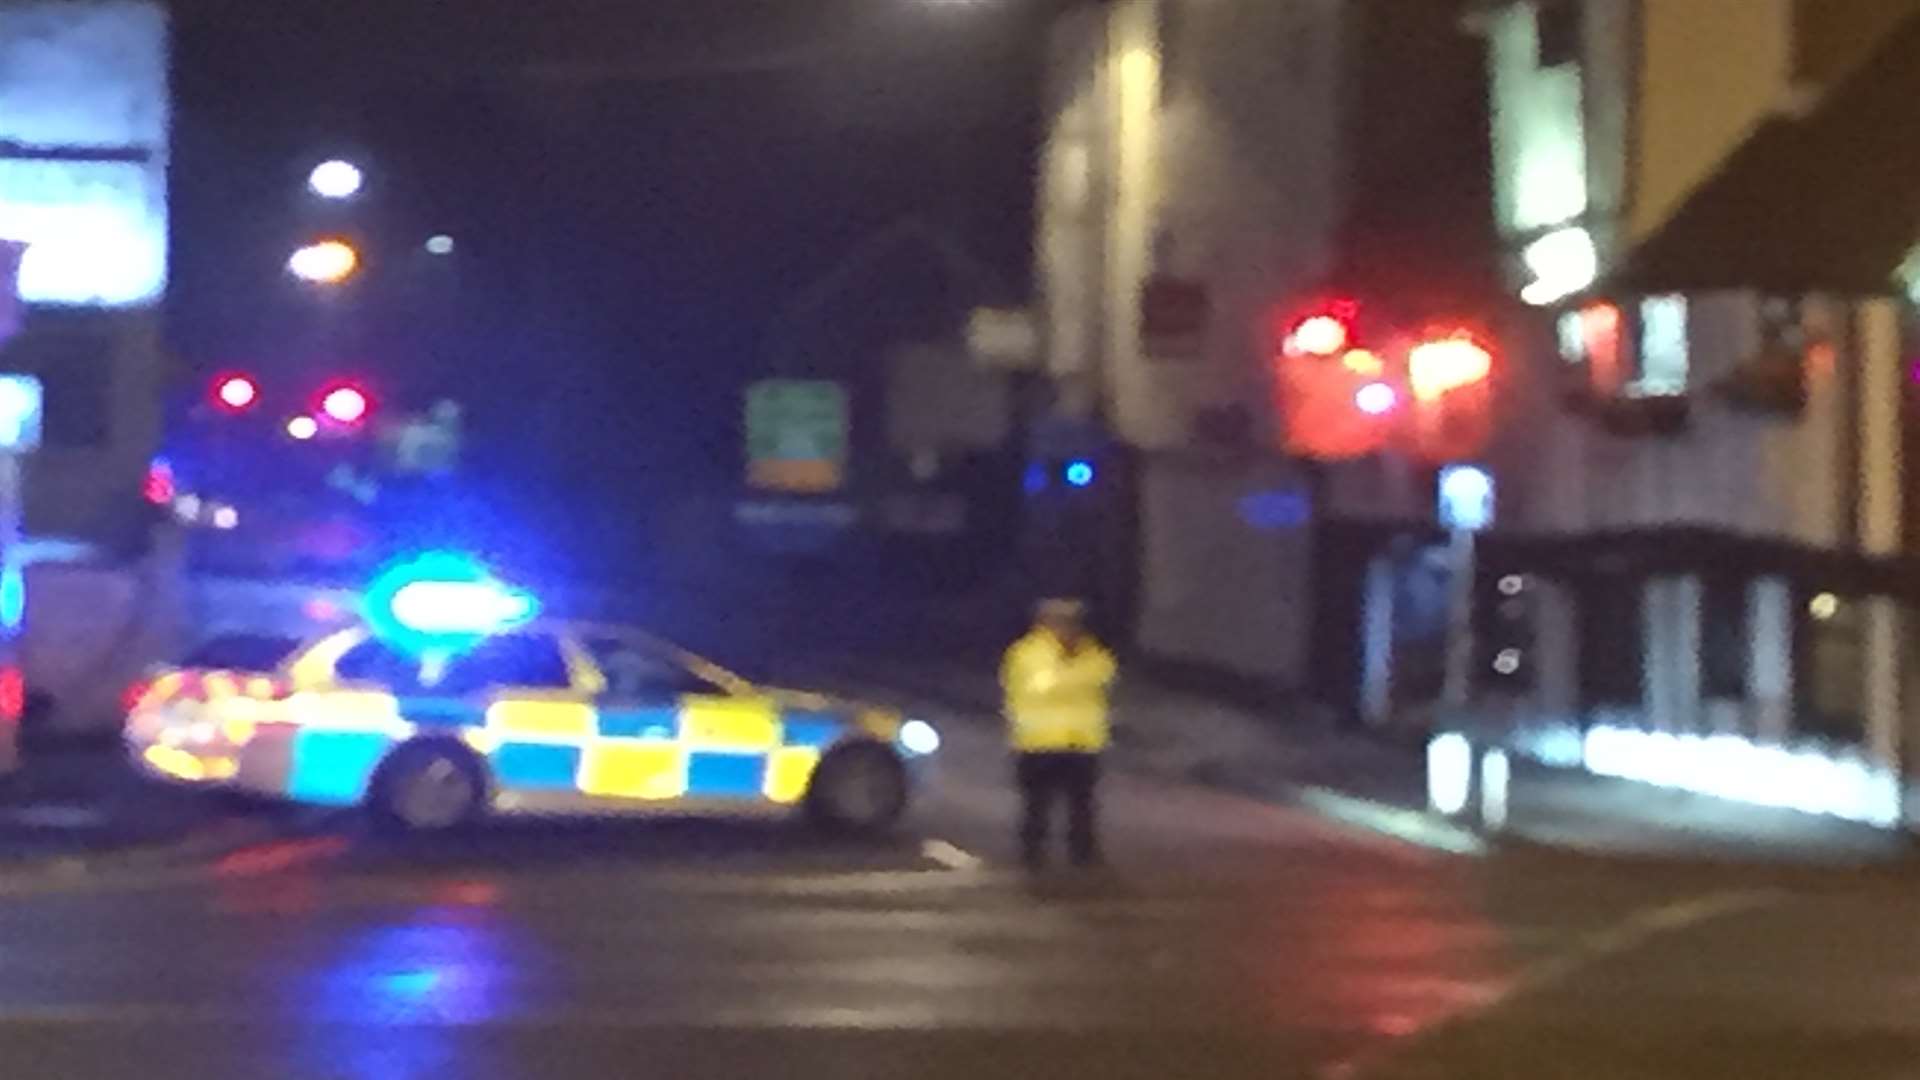 Police had closed off Knightrider Street, Maidstone.